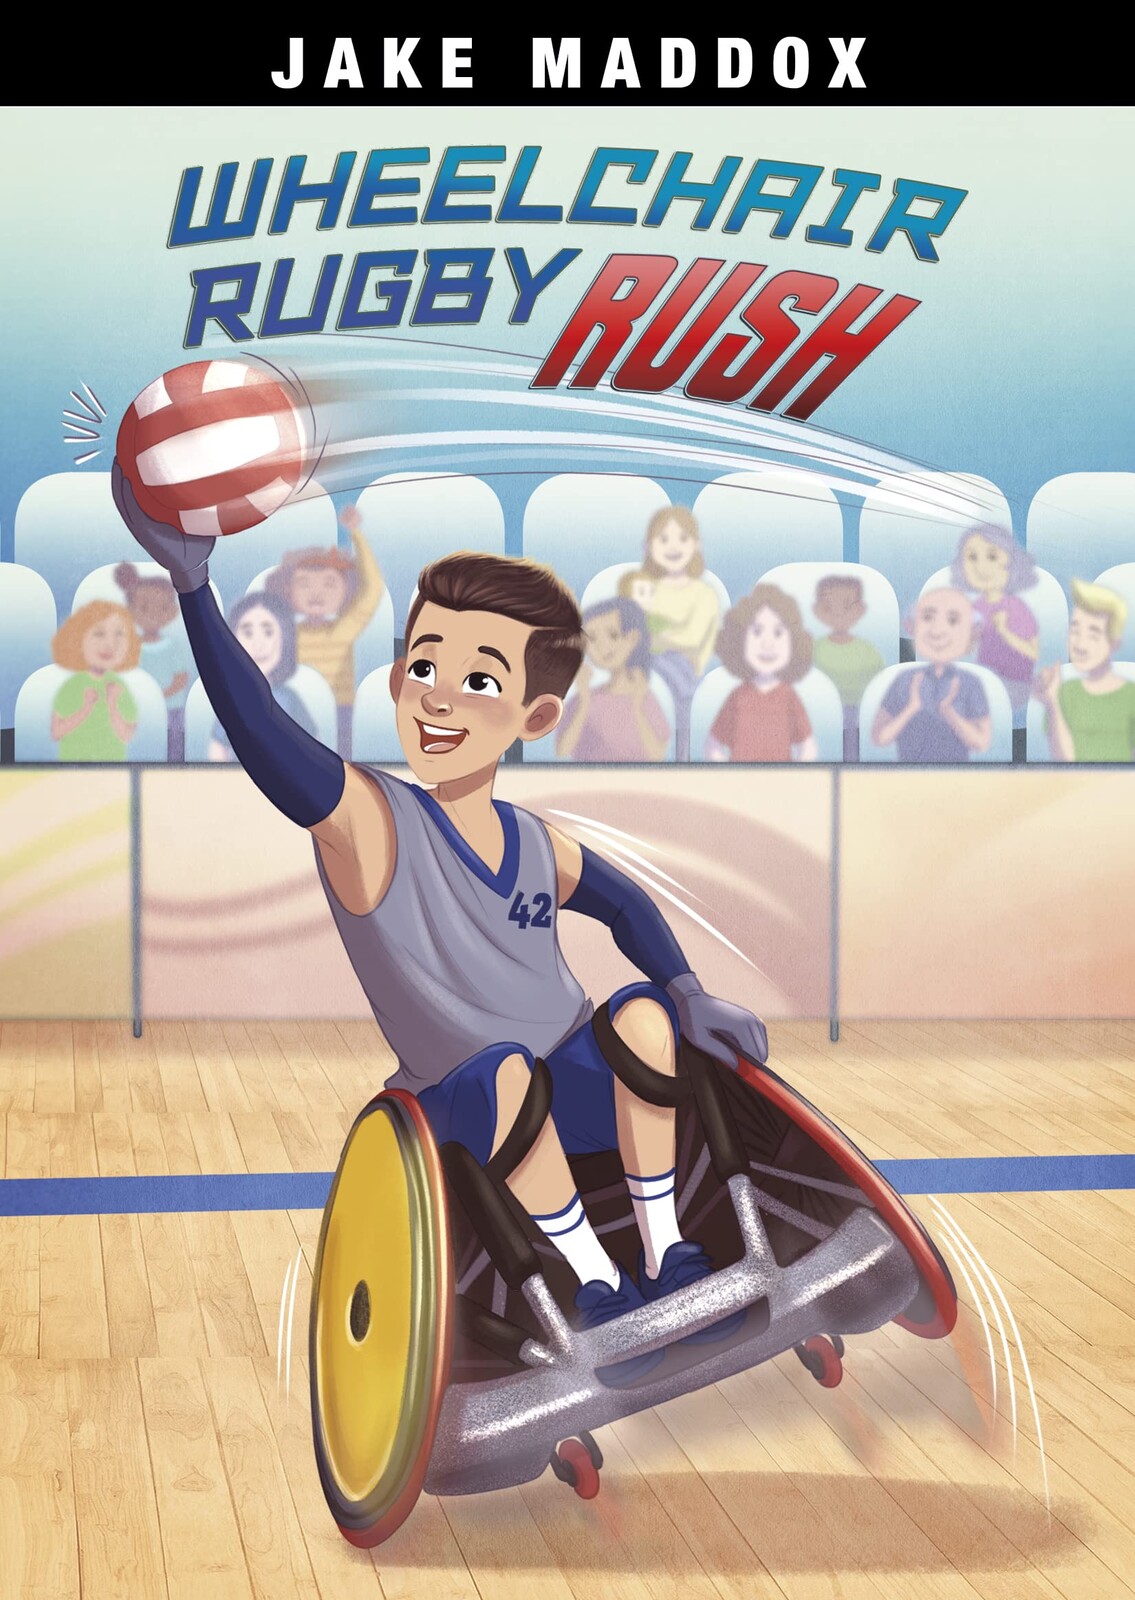 Wheelchair Rugby Rush (Jake Maddox Sports Stories)
Author: Jake Maddox
Illustrator: Eva Morales
Publisher: ©Capstone (2023)
Languaje: English
ISBN: 978-1669007296